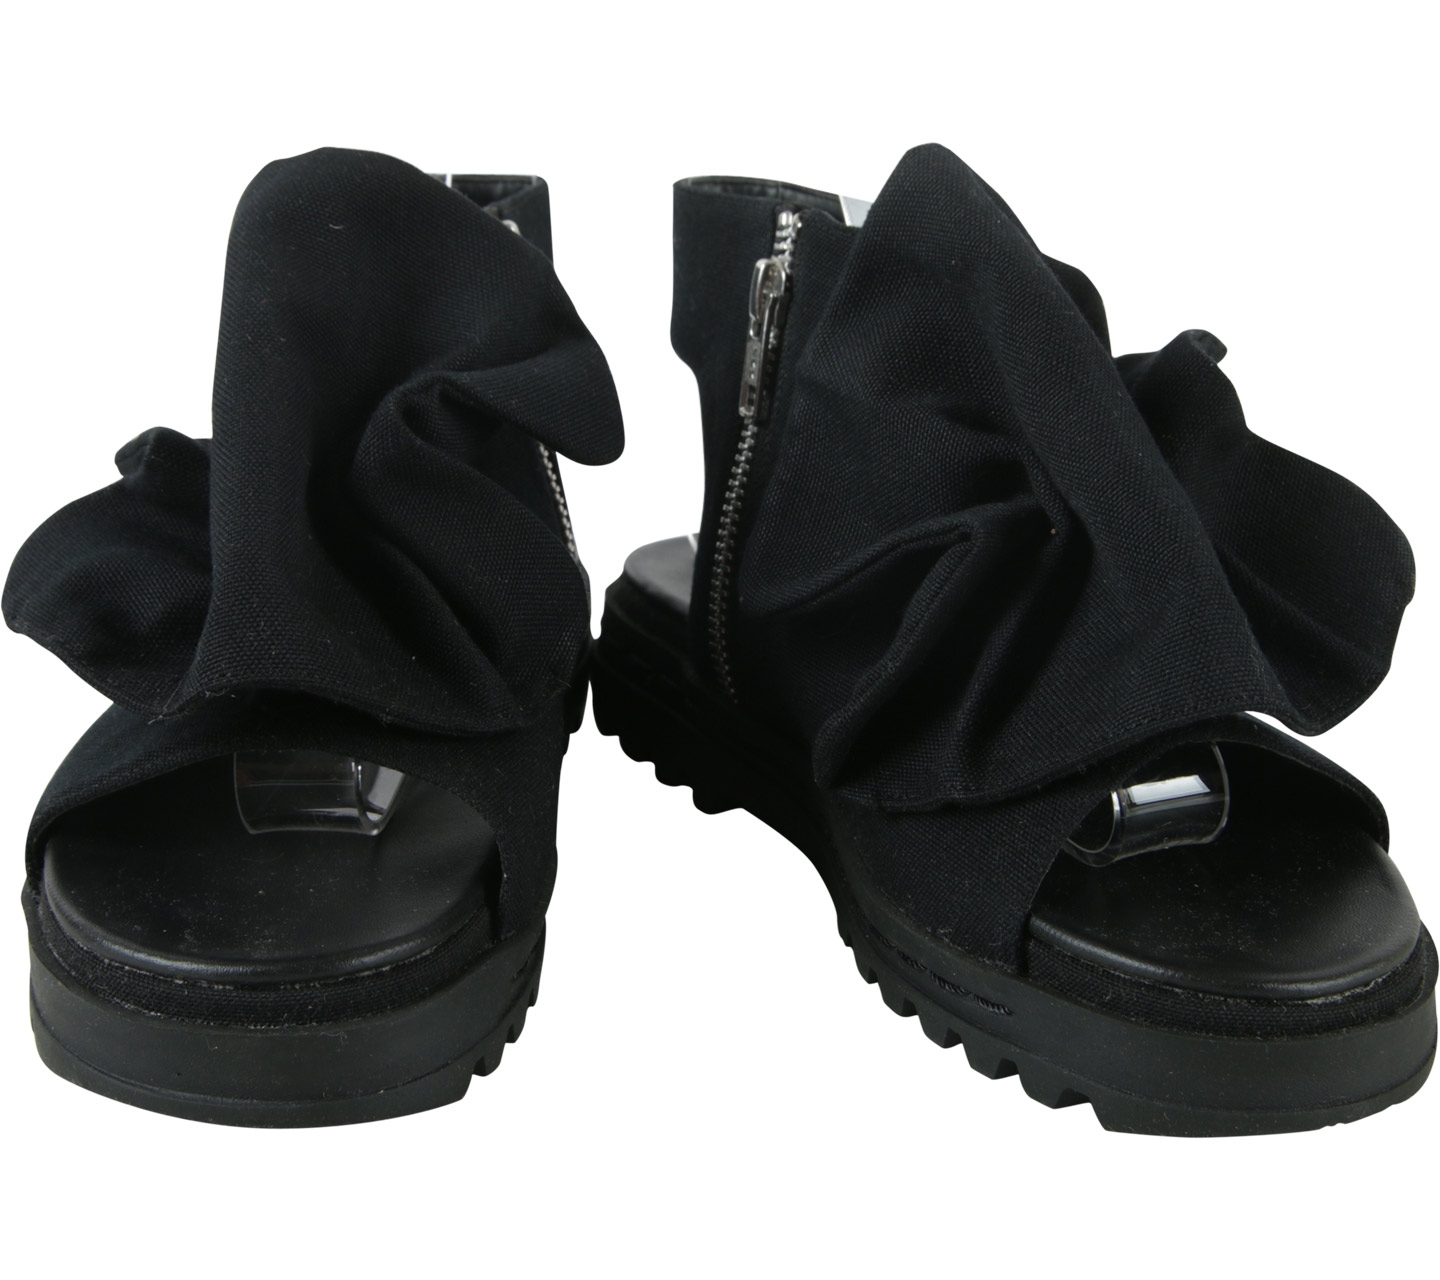 MKS' Black Sandals